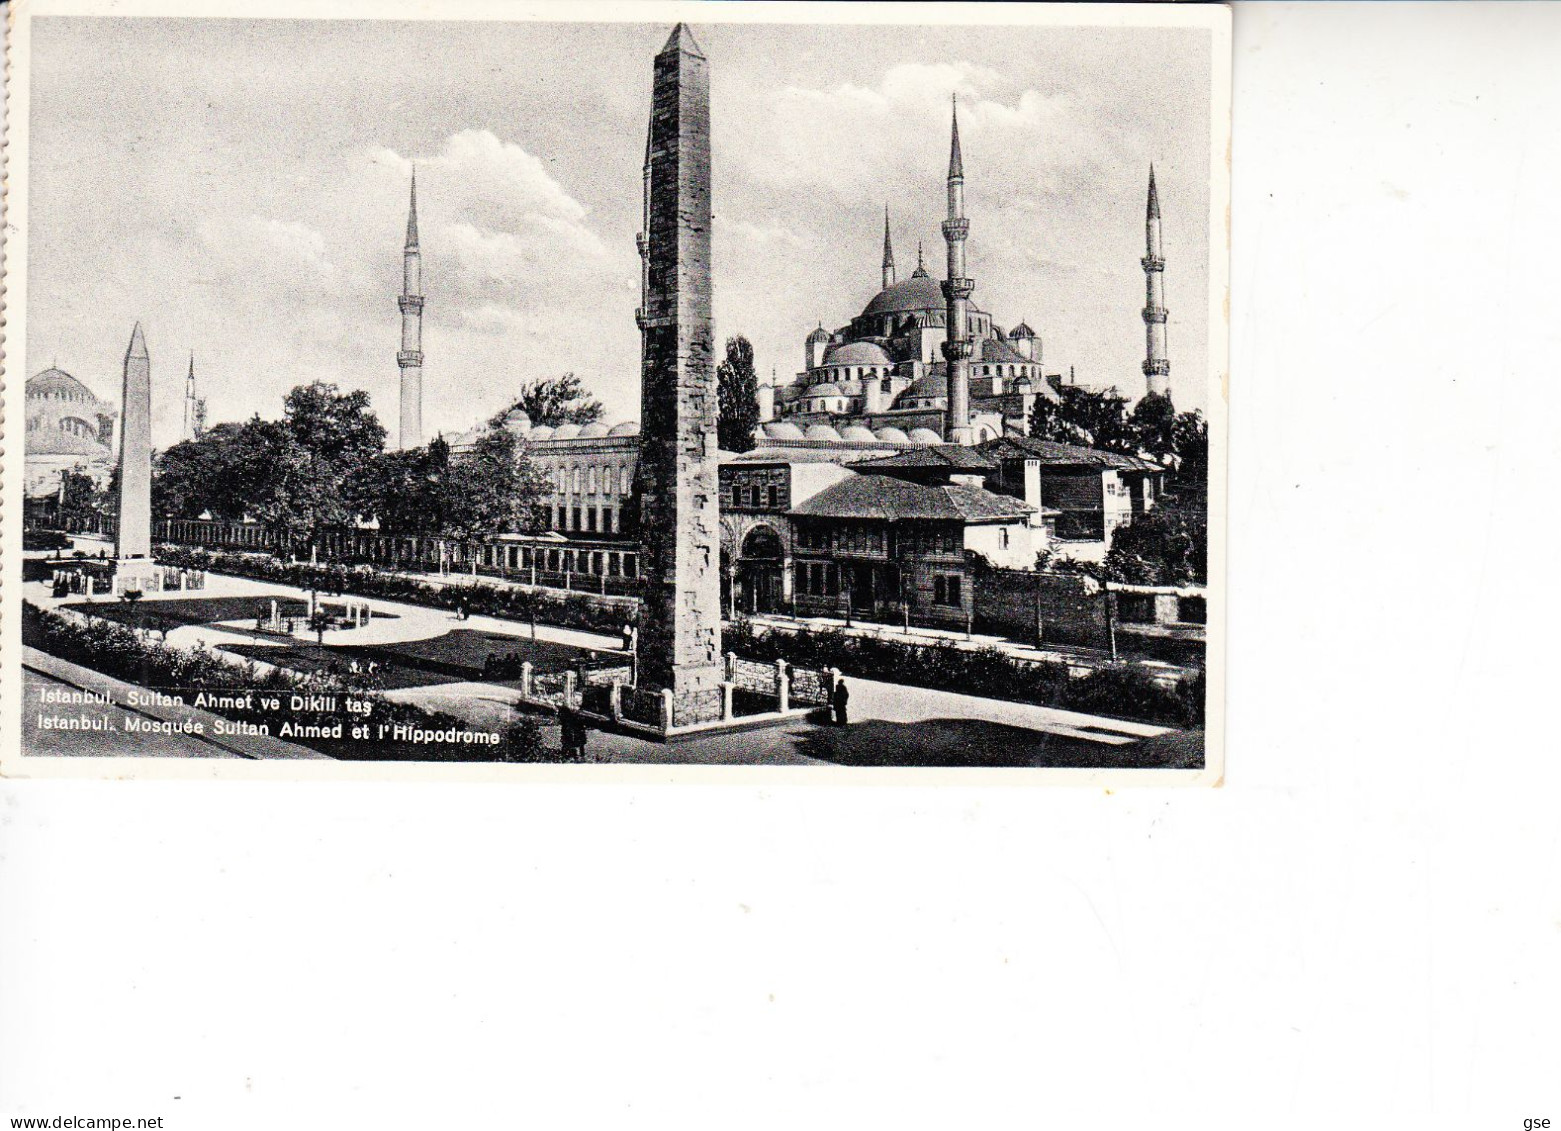 TUECHIA  1946 - Cartolina Per Zurich - Covers & Documents